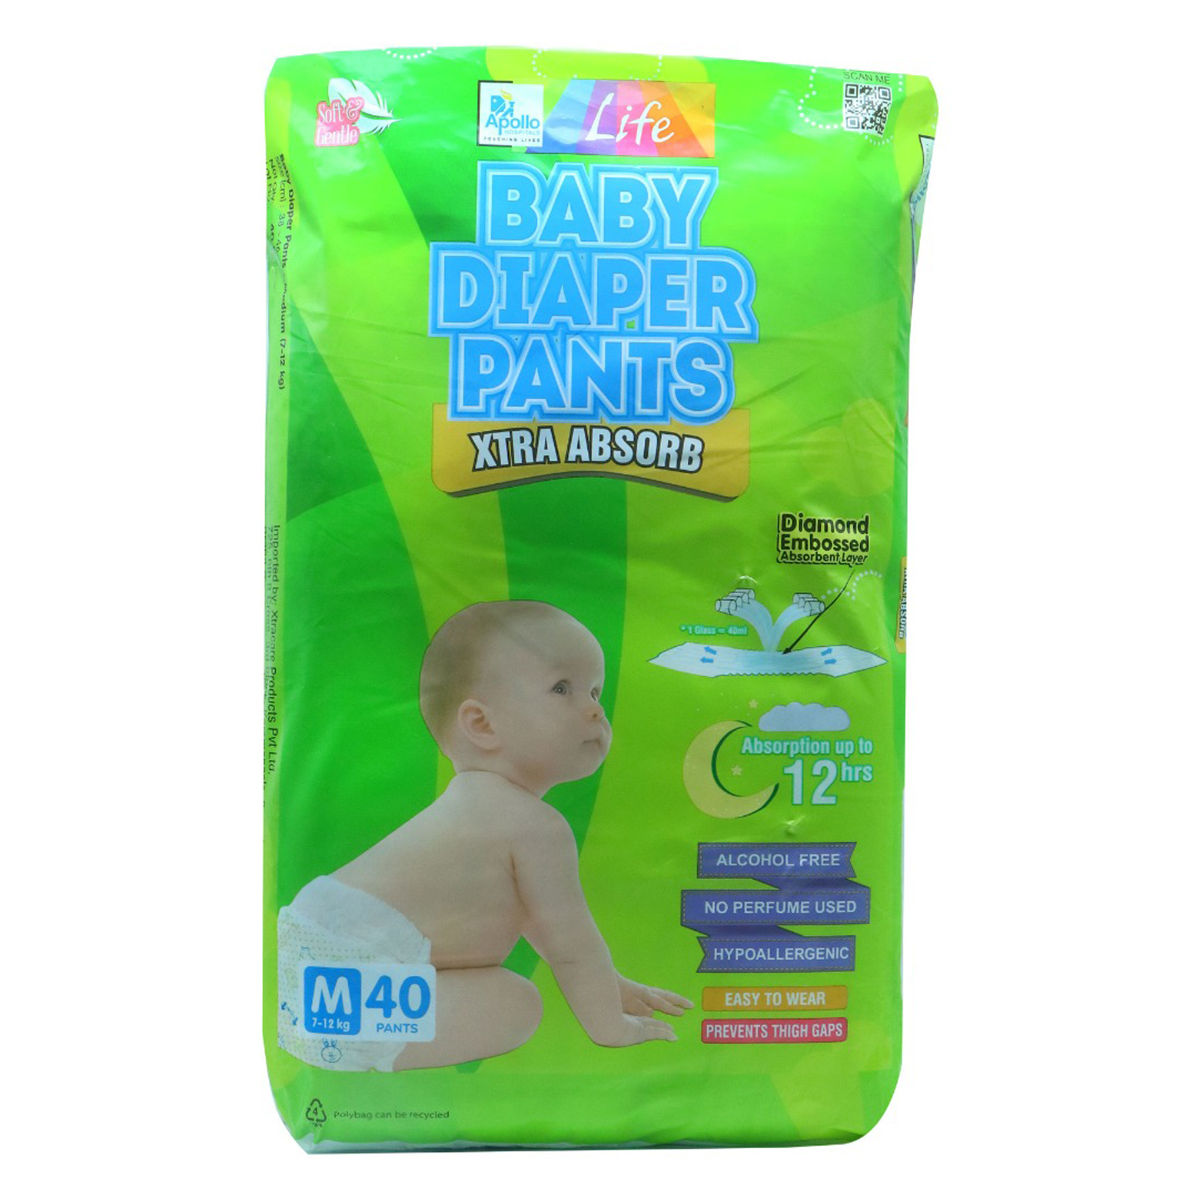 Pant Diapers Himalaya Baby Diaper Pants Medium Age Group 12 Years